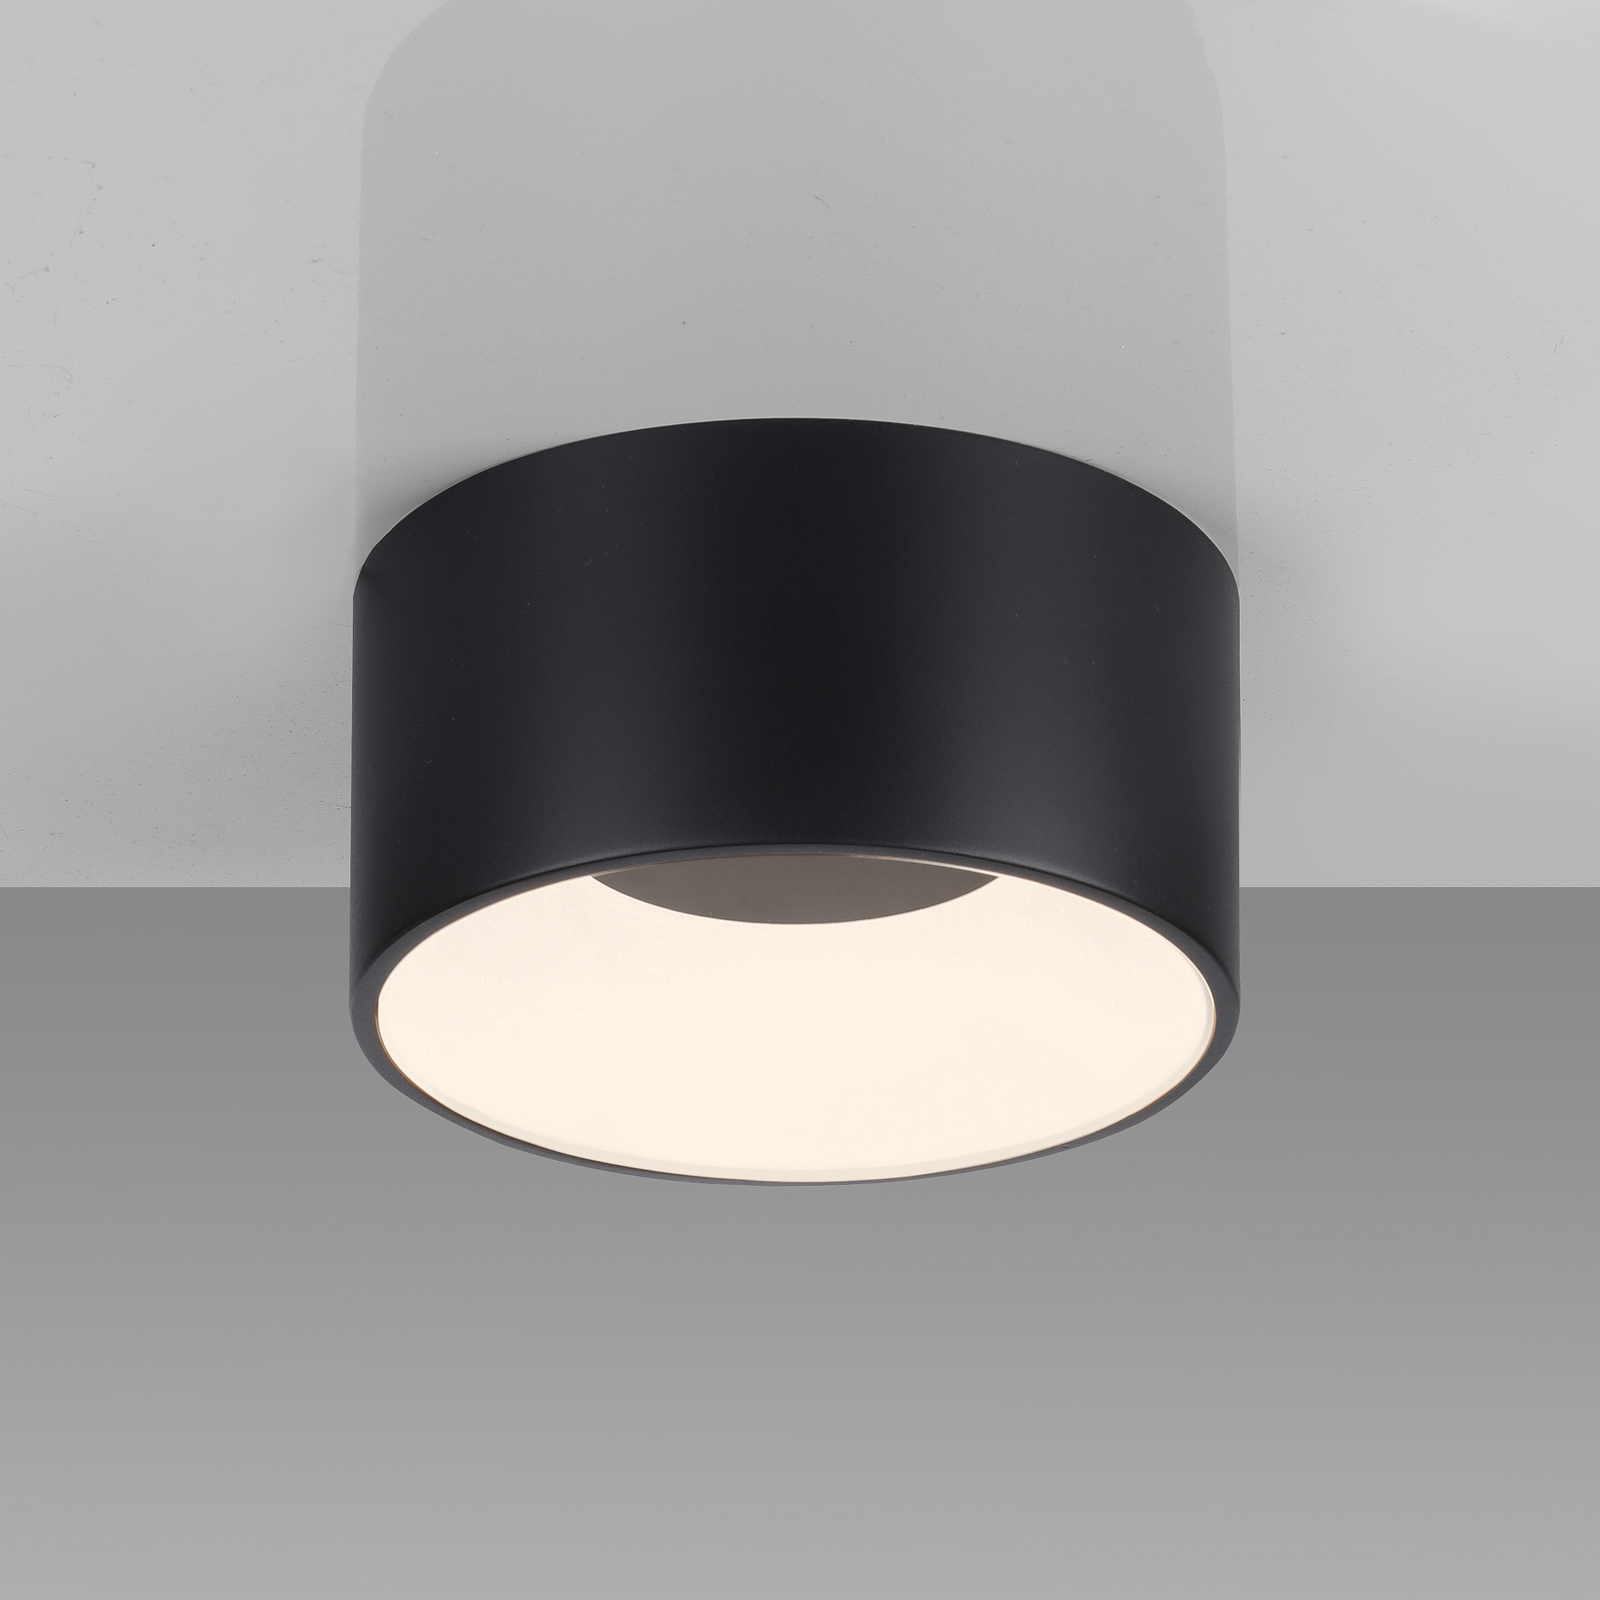 JUST LIGHT. Plafonnier LED Tanika noir, Ø16cm, intensité variable